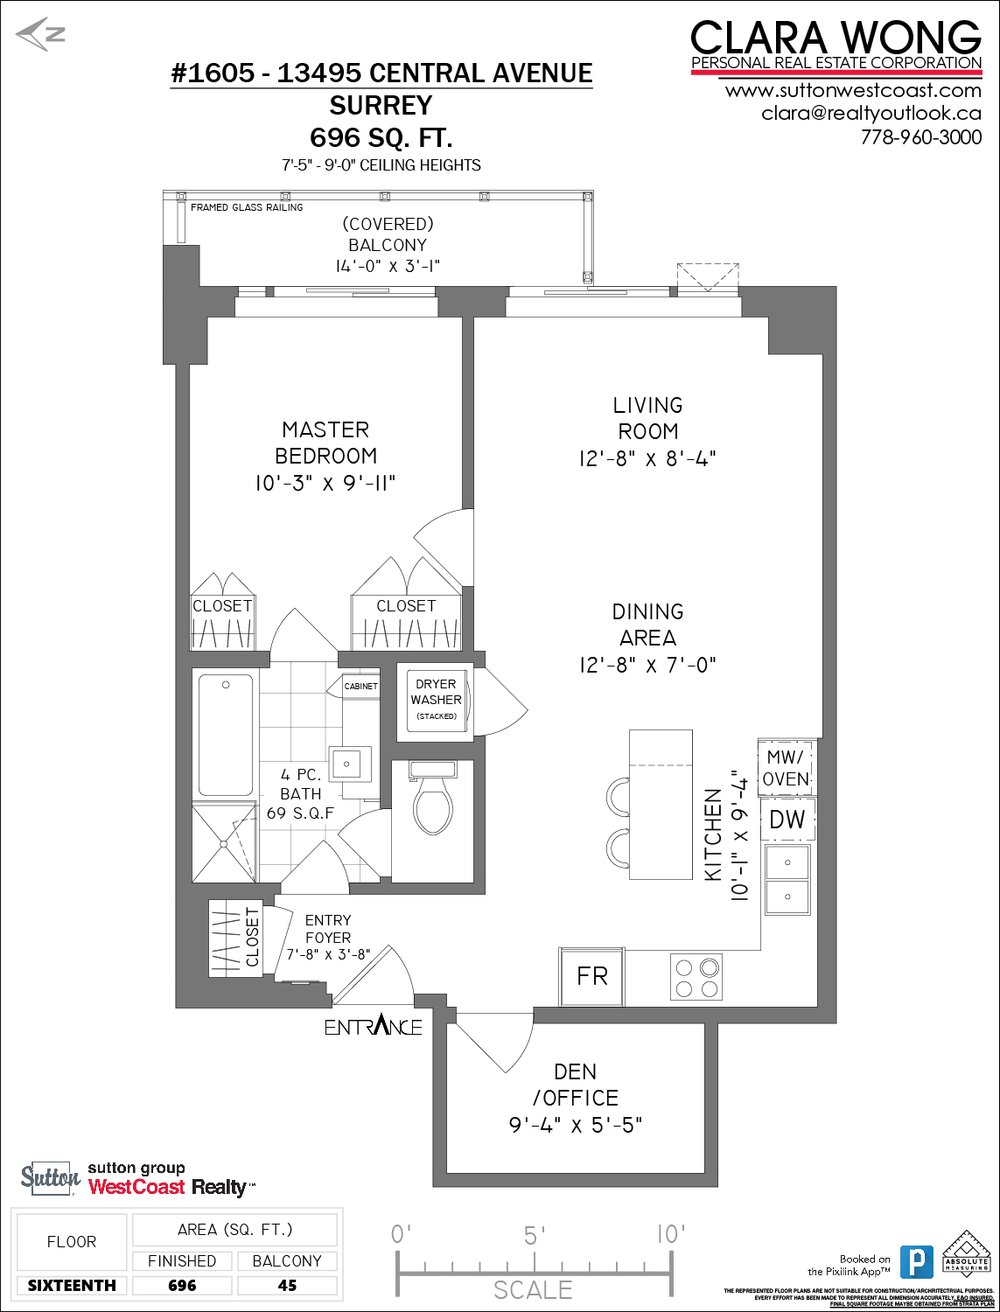 Floor Plan for a Studio Apartment in 